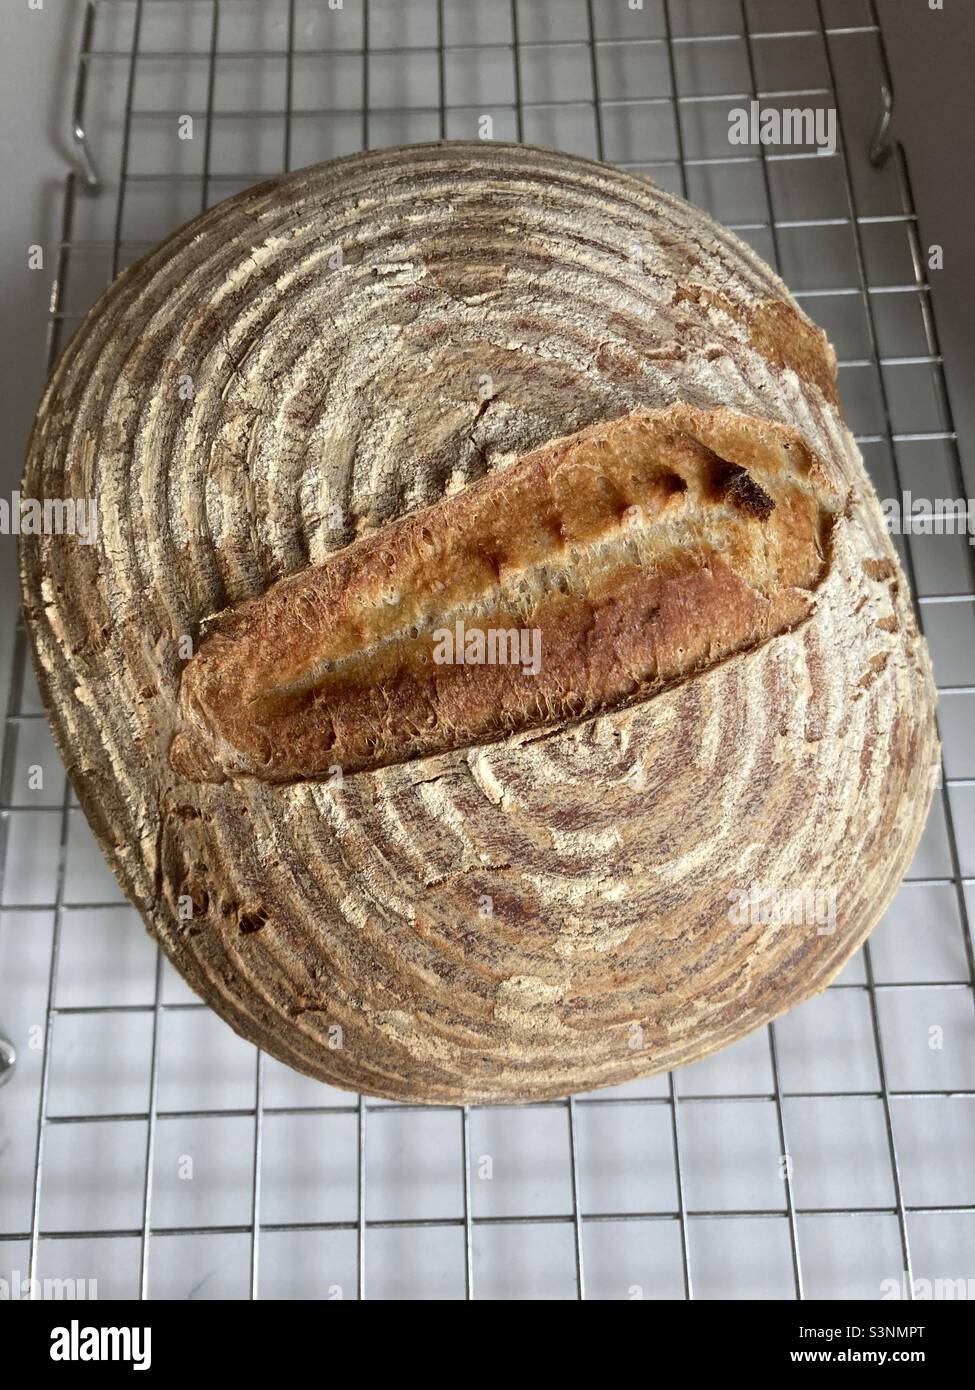 Pan recién horneado de masa fermentada que se enfría en un estante Foto de stock